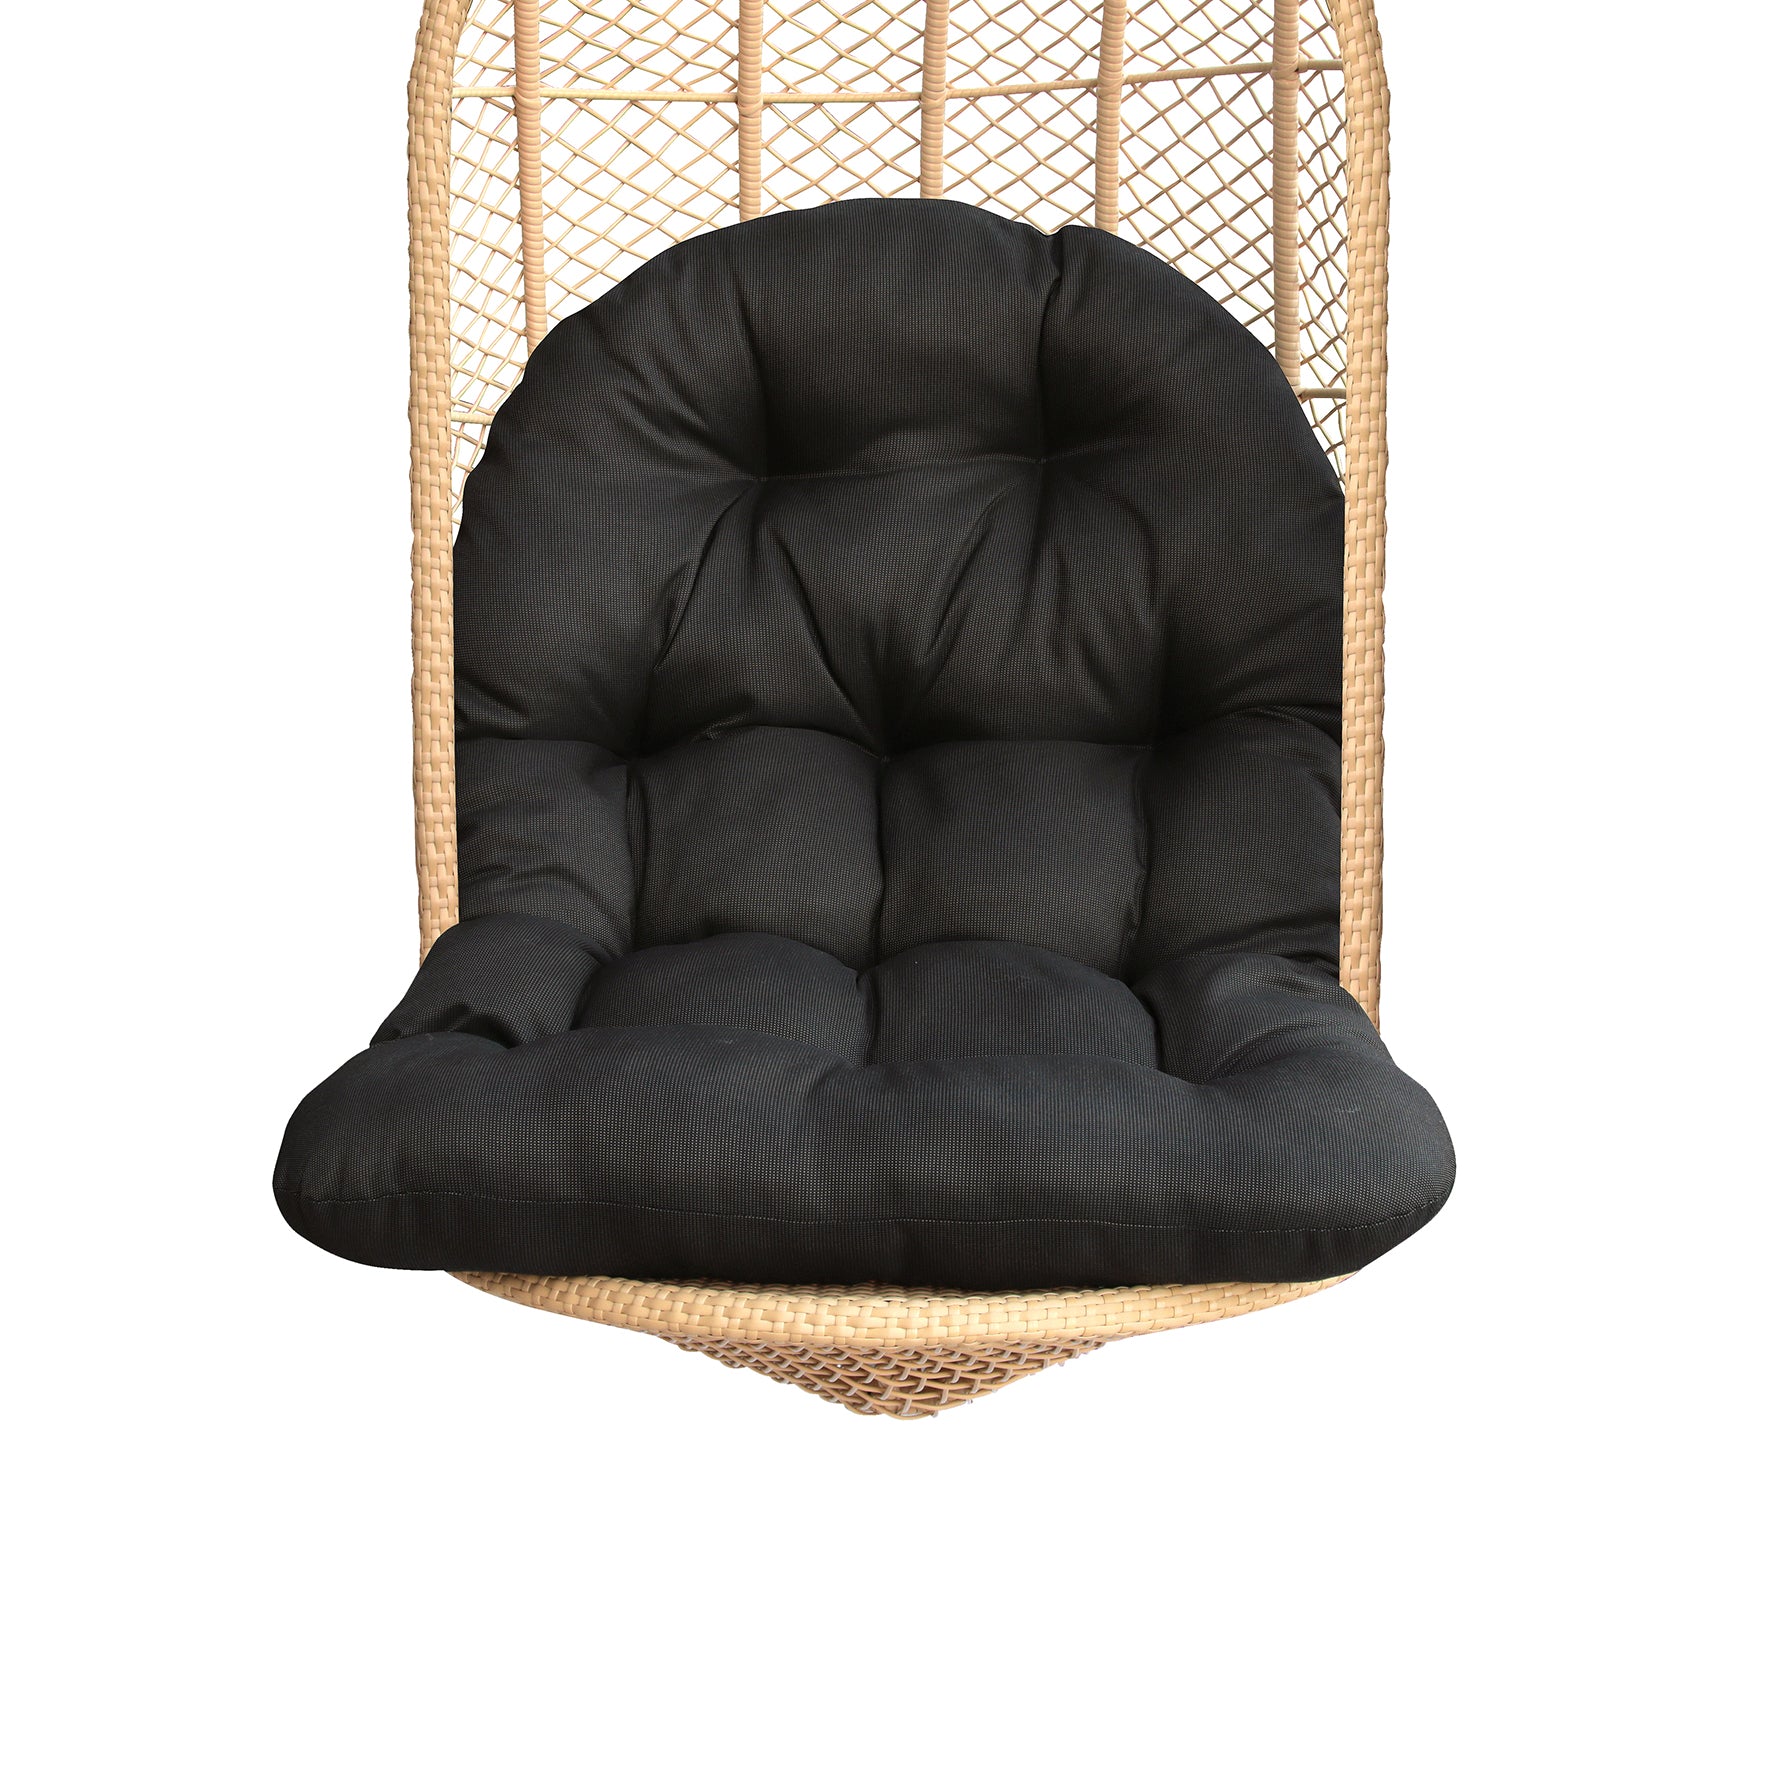 Patio Balcony Hanging Basket Chair Cushions Egg Chair Swing Chair Pads (Olefin Mixed Black/Grey)